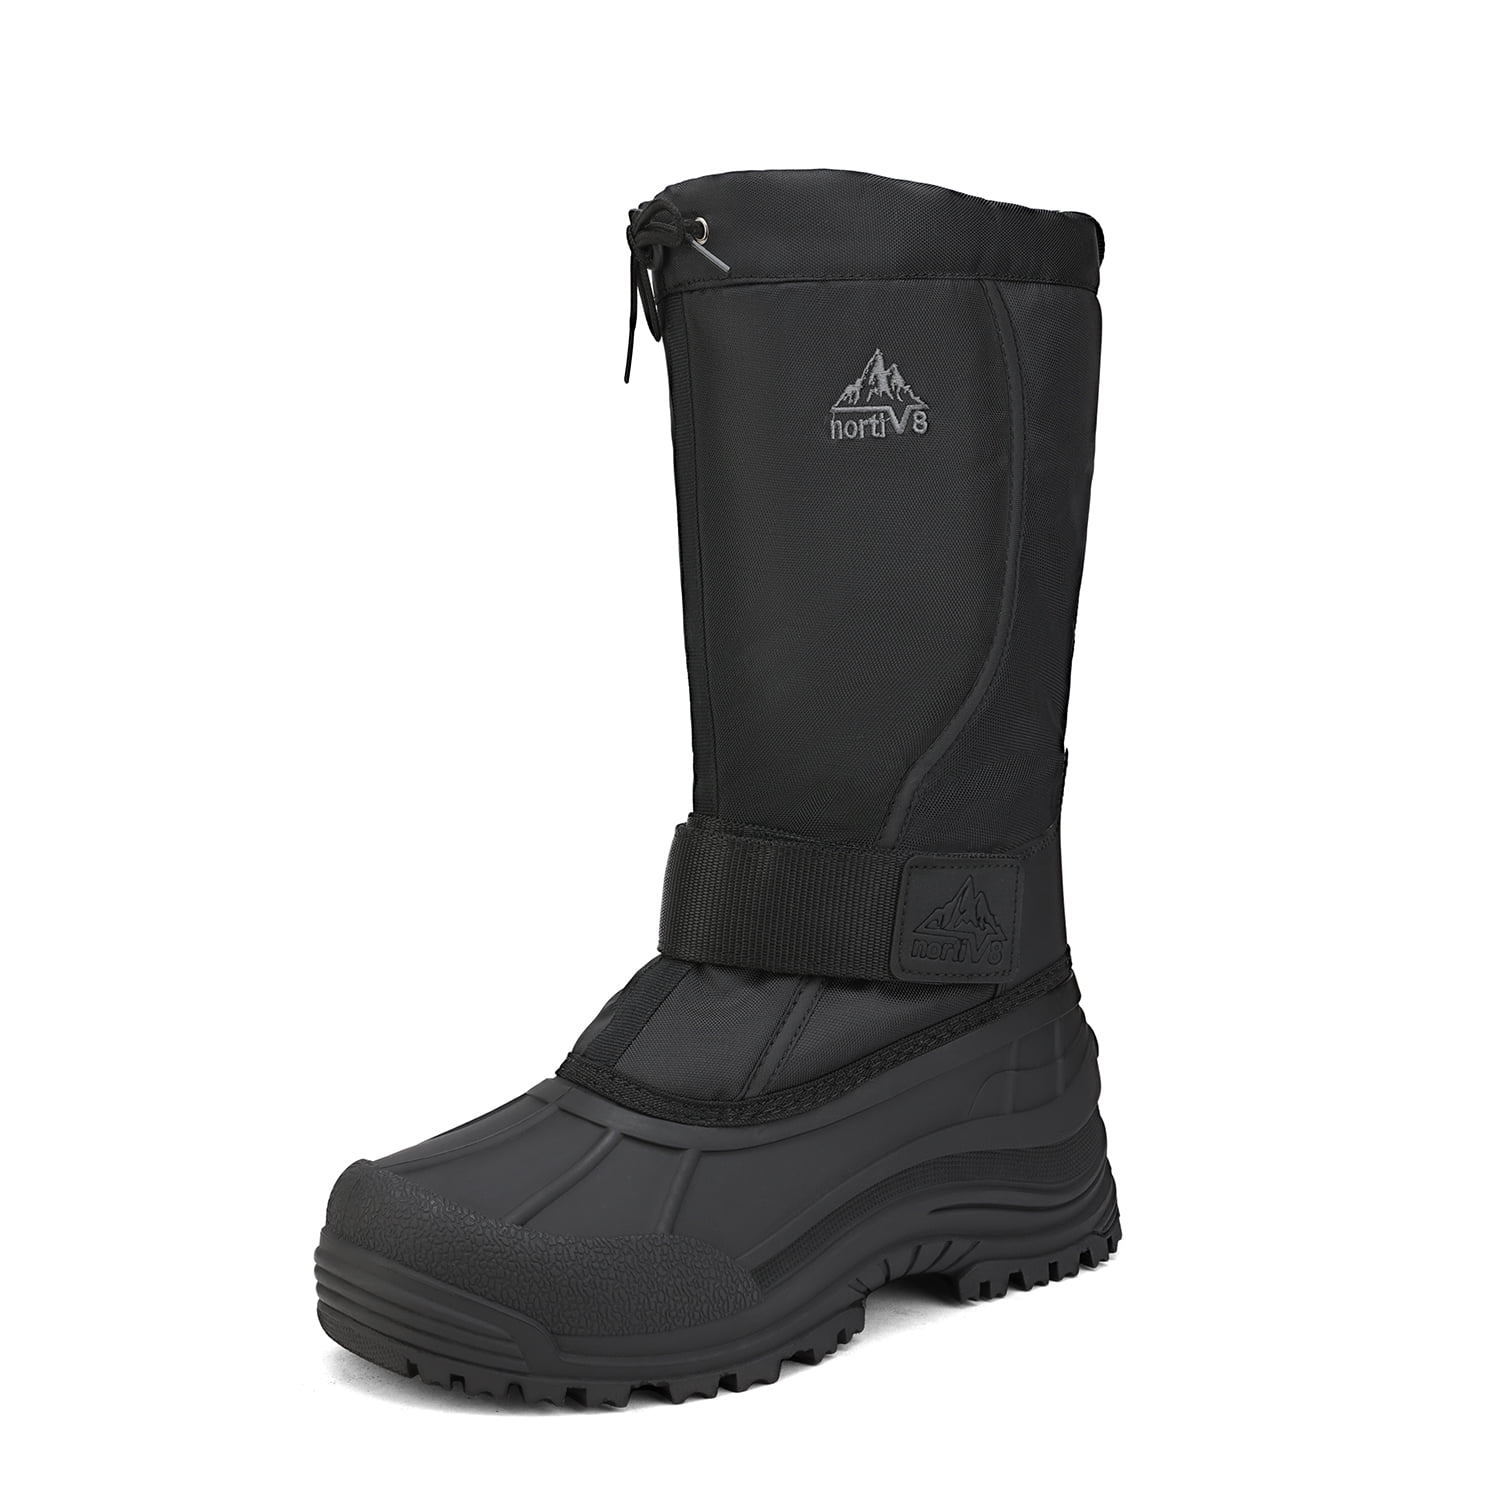 Nortiv8 Mens Winter Snow Boots Outdoor Hiking Boots Warm Lightweight ...